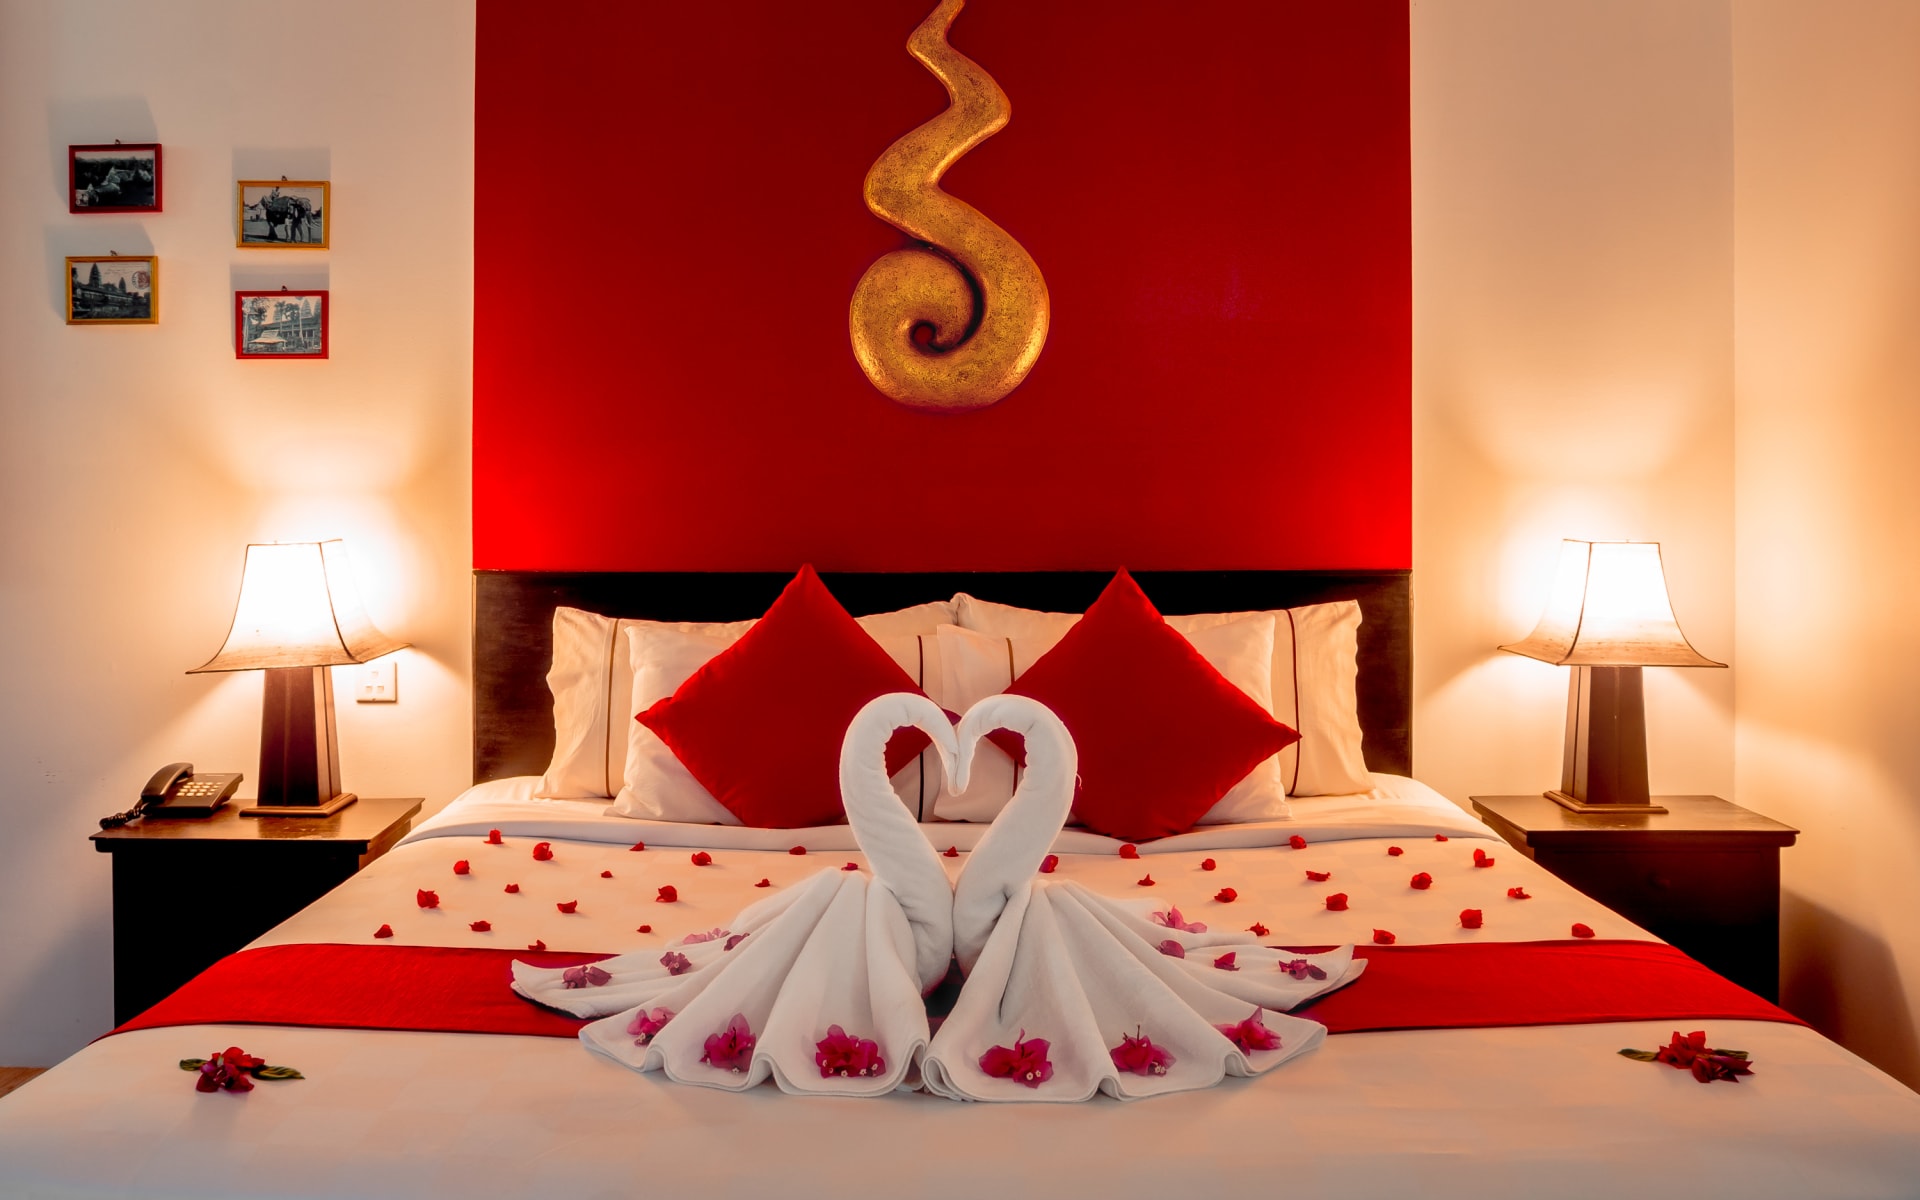 Siddharta_Siem_Reap_Honeymoon_Room_knuzae